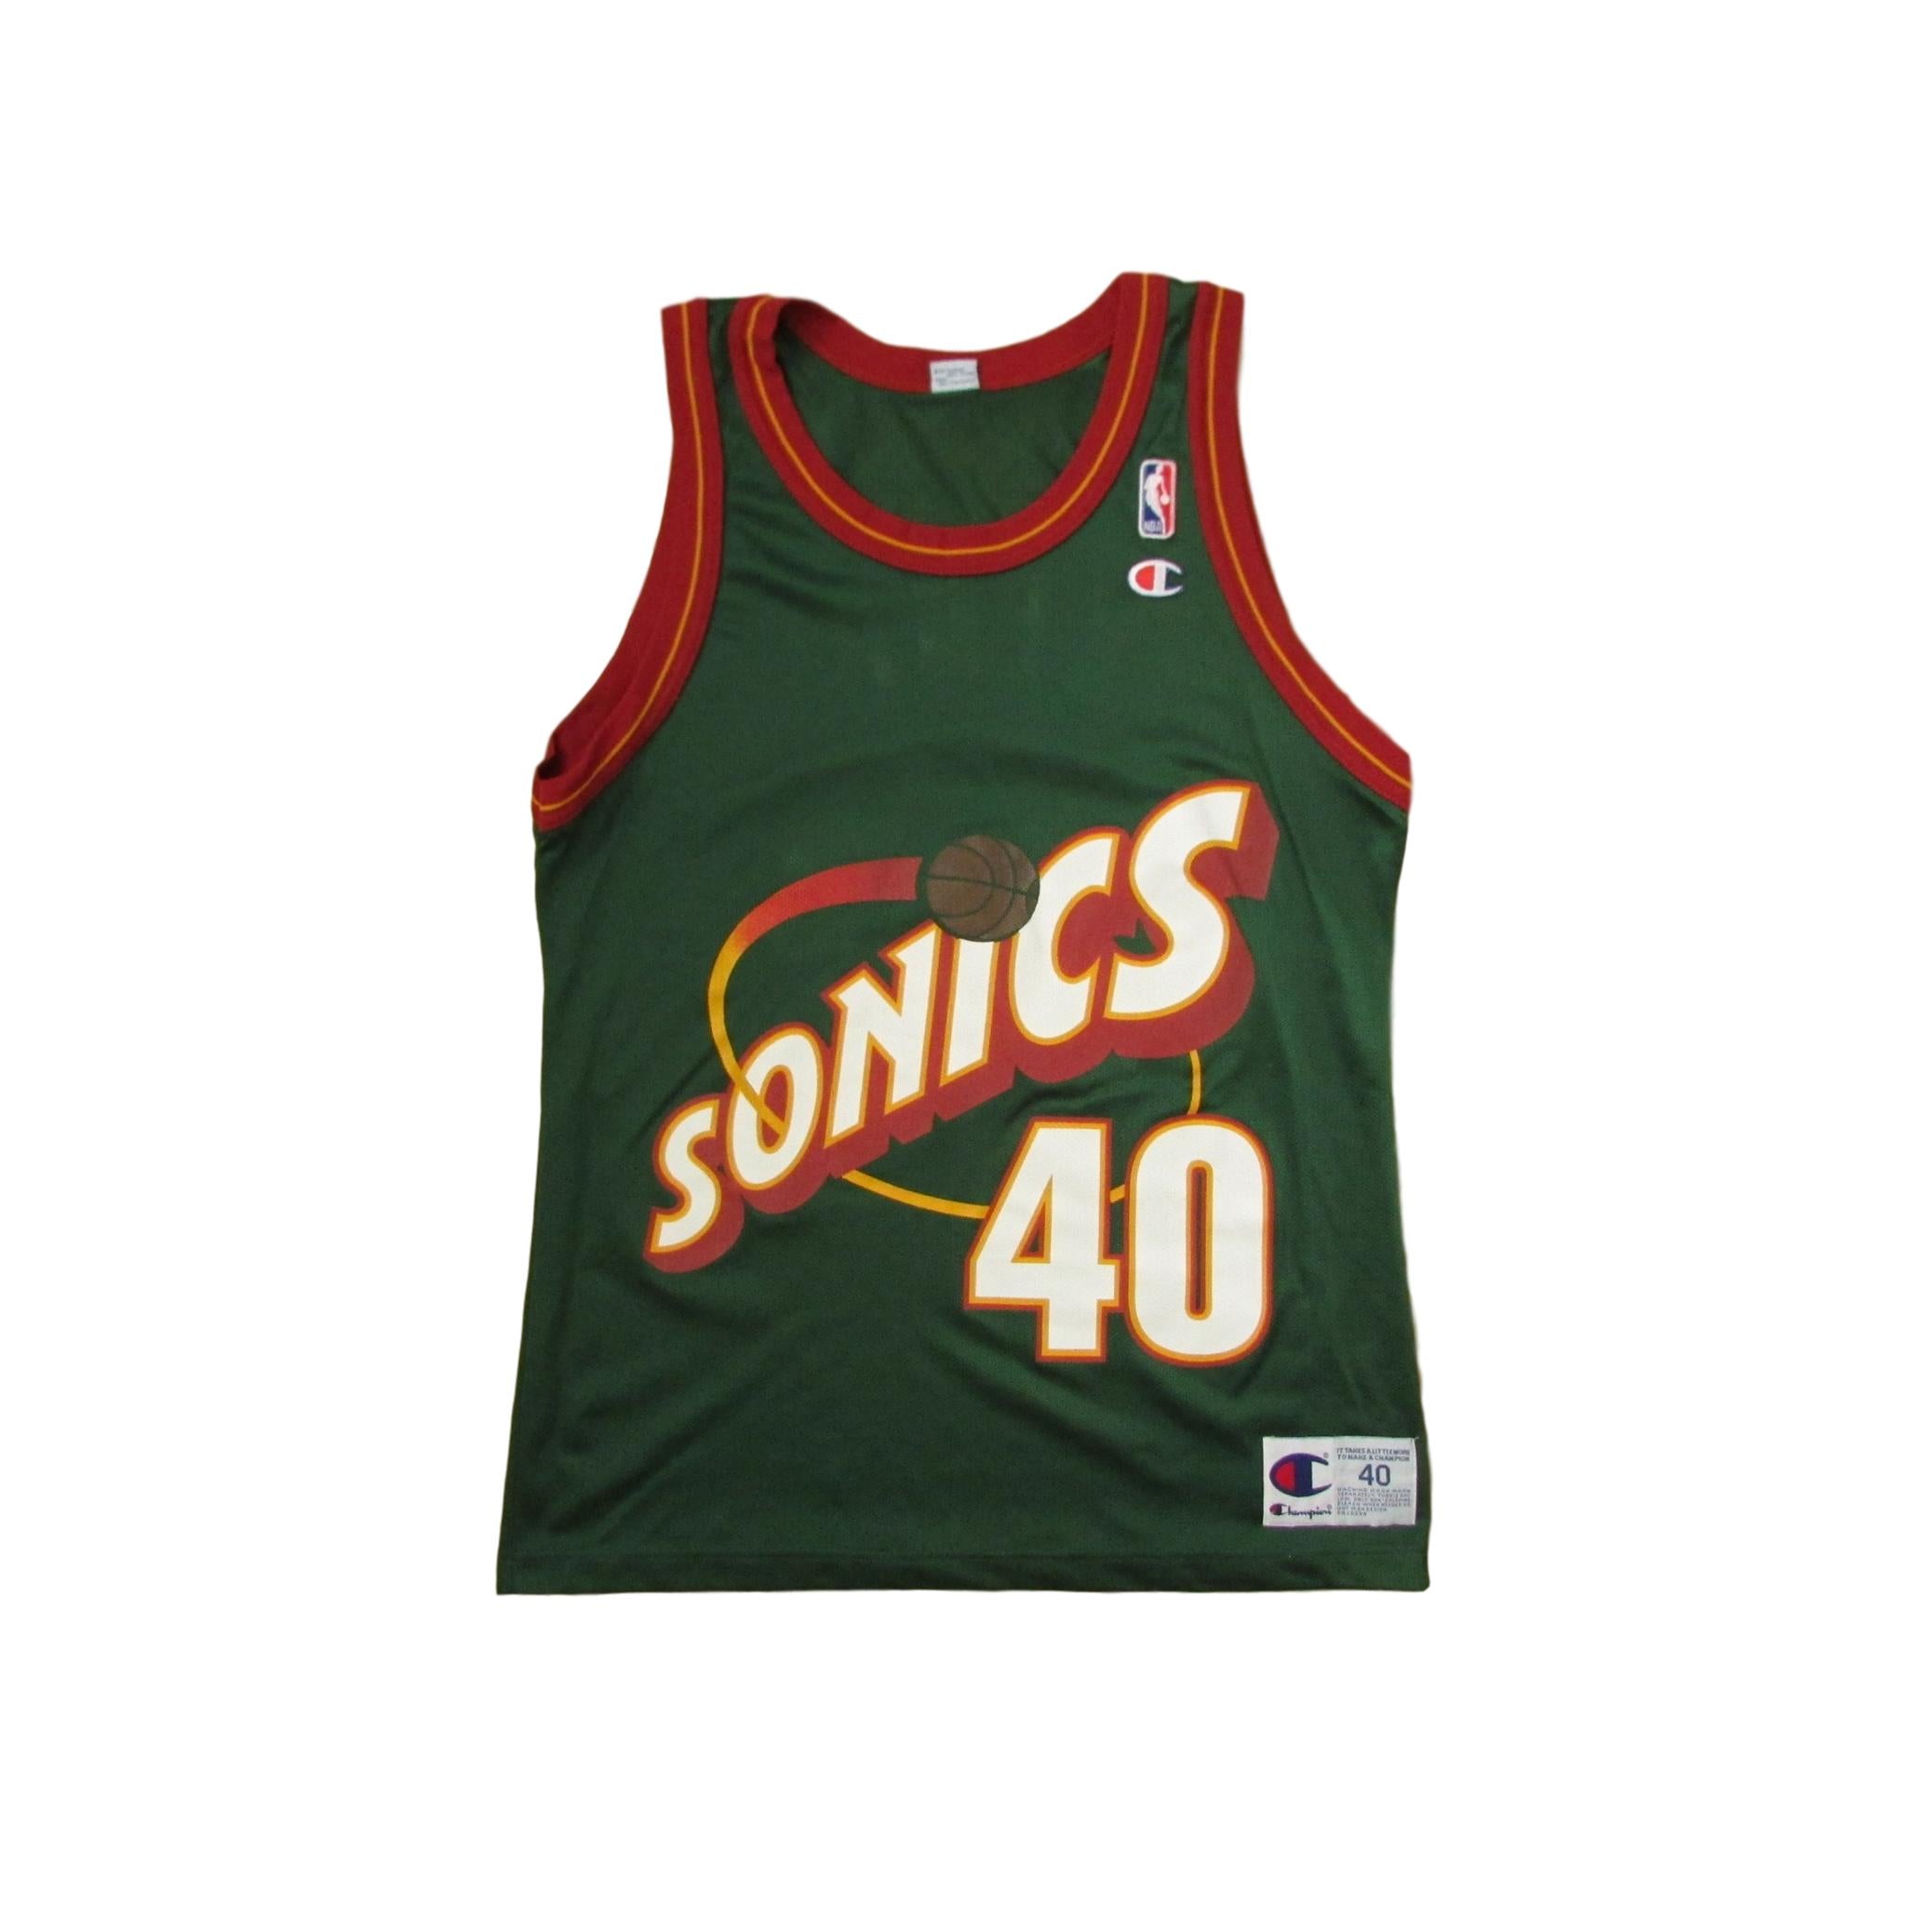 sonics 40 jersey